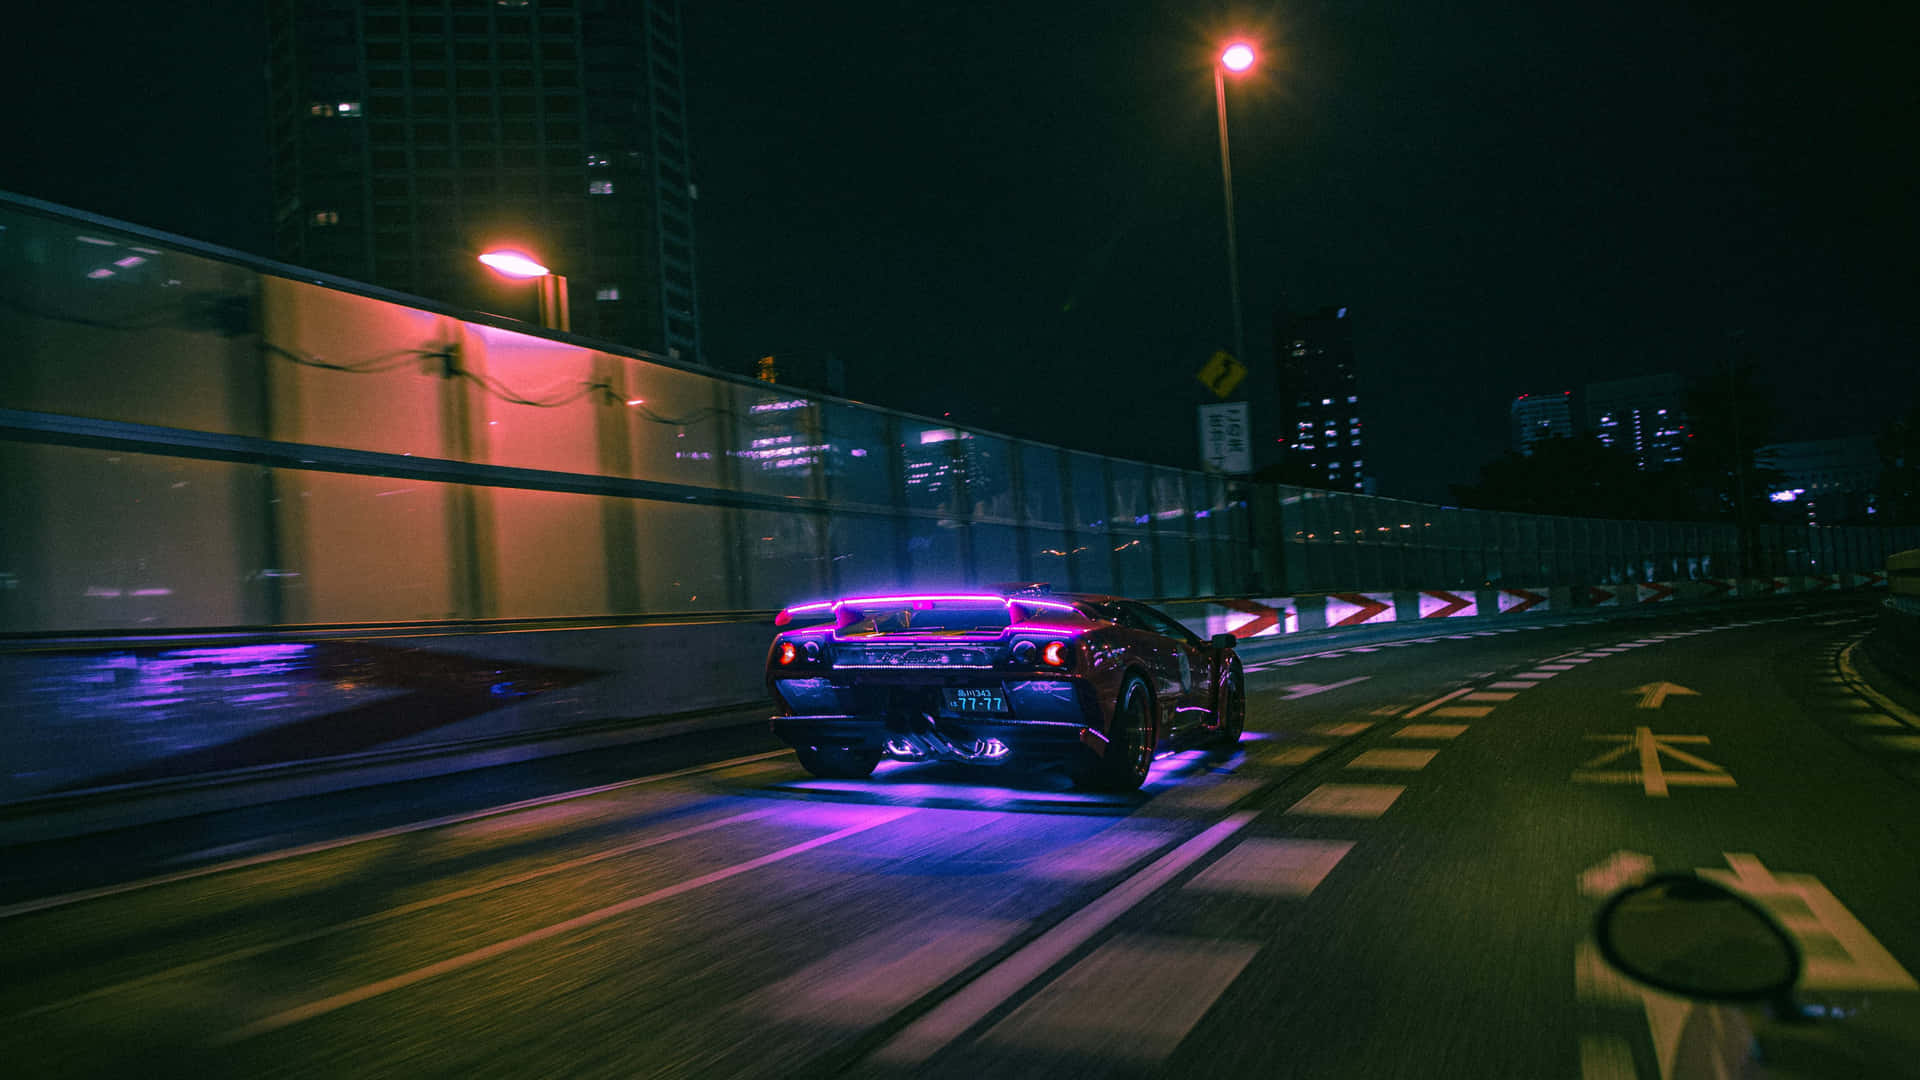 Captivating Neon Lamborghini In Action Background